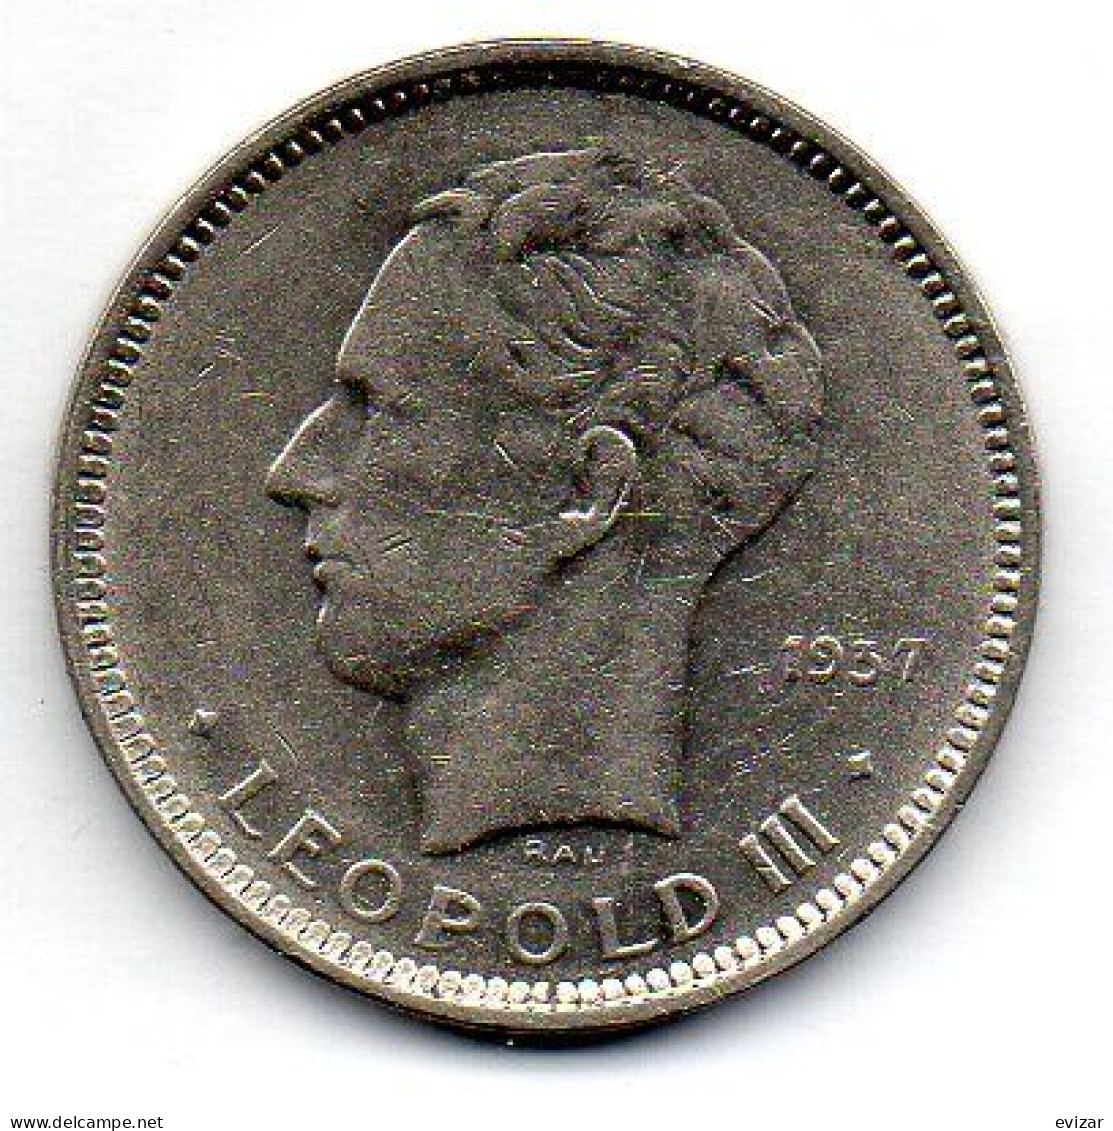 BELGIUM - 5 Francs, Nickel, Year 1937, KM # 108.1, French Legend - 5 Francs